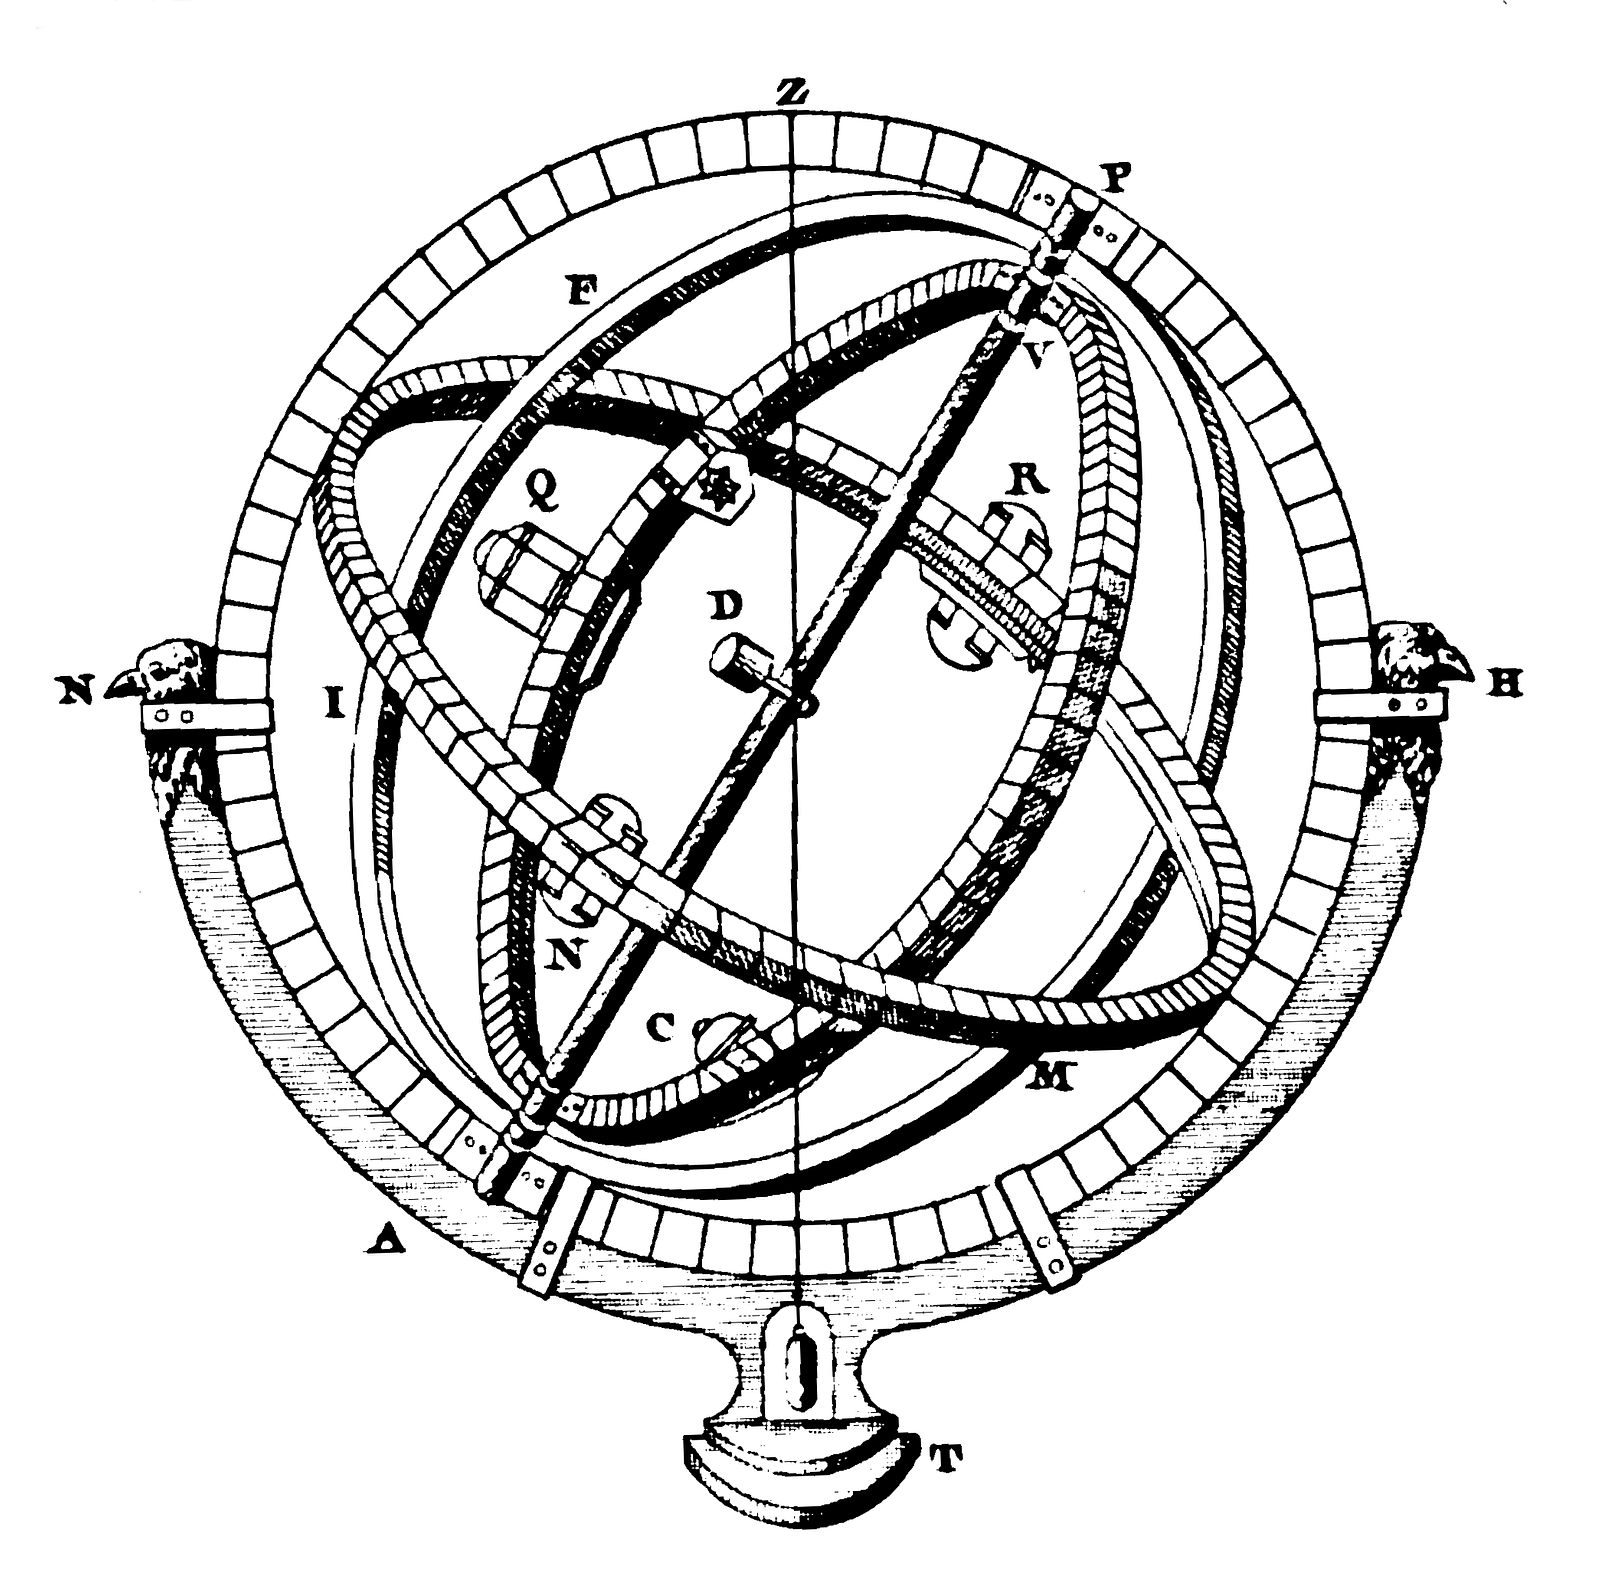 Armillary sphere | PICRYL - Public Domain Media Search Engine